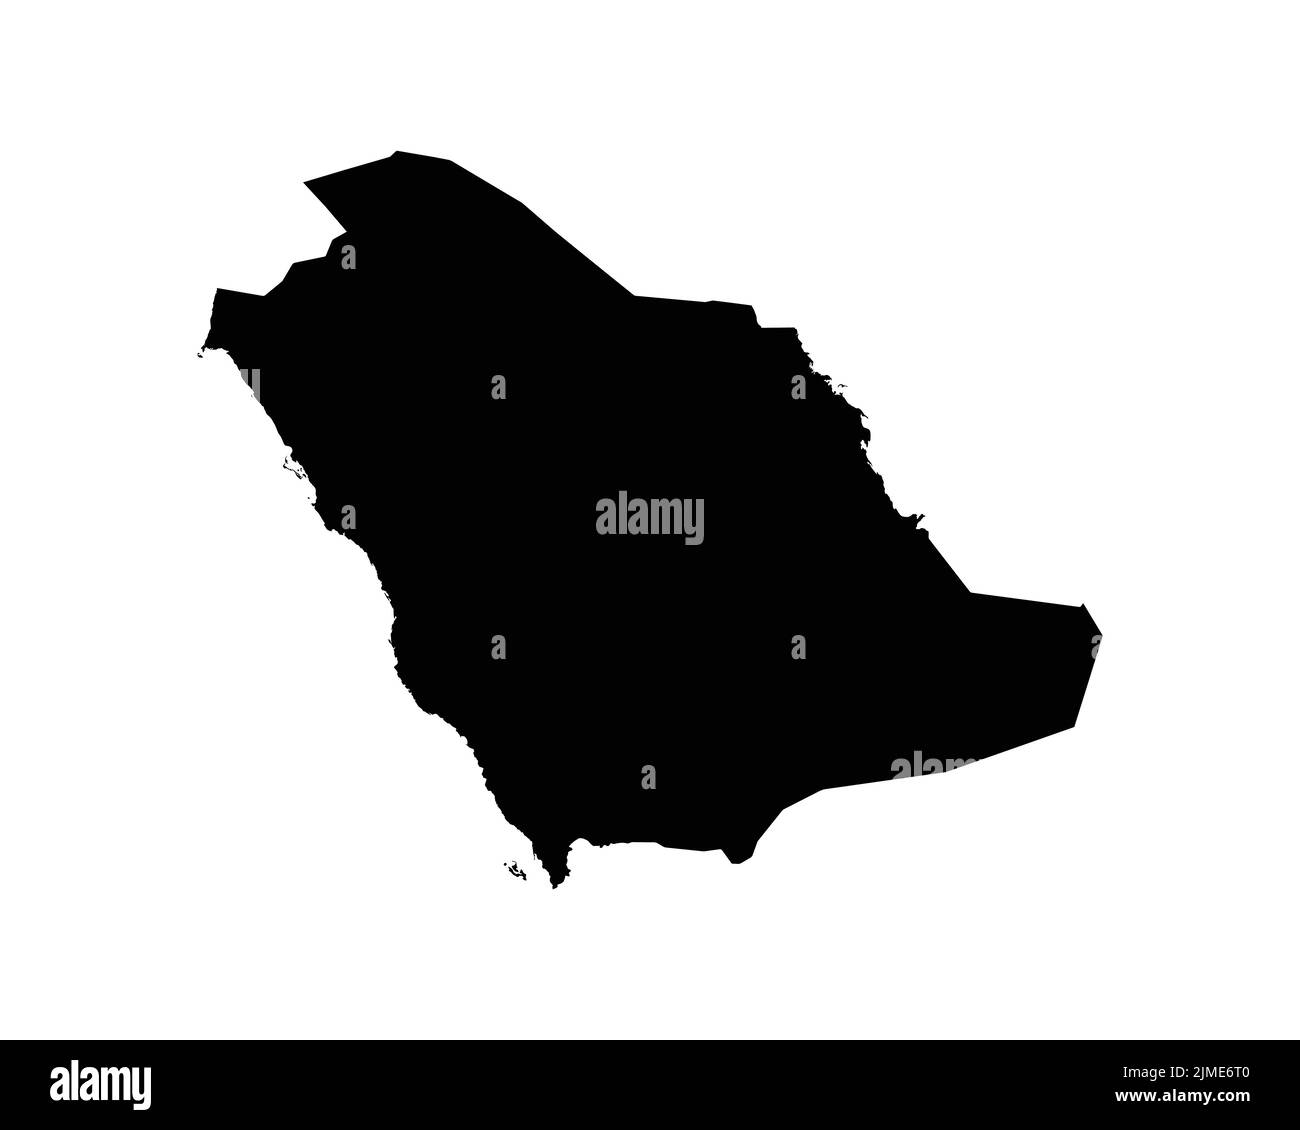 Saudi Arabia Map. Saudi Arabian Country Map. Black and White Saudi National Nation Geography Outline Border Boundary Territory Shape Vector Illustrati Stock Vector